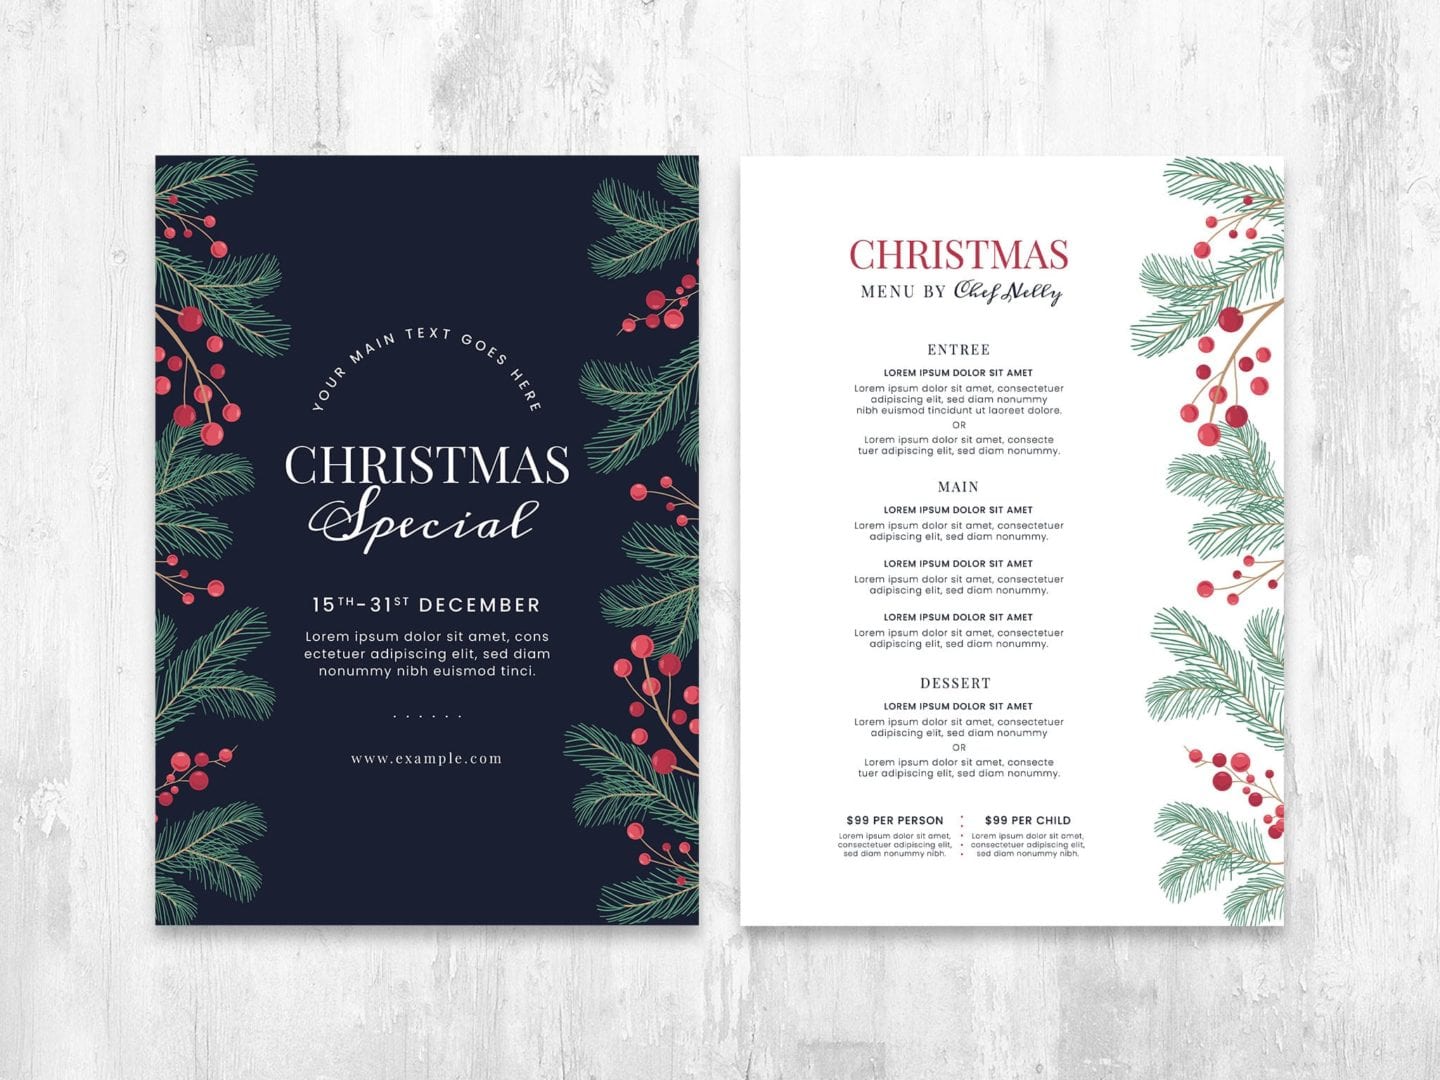 Simple Christmas Menu Poster Template [Adobe Illustrator] - BrandPacks With Regard To Adobe Illustrator Menu Template